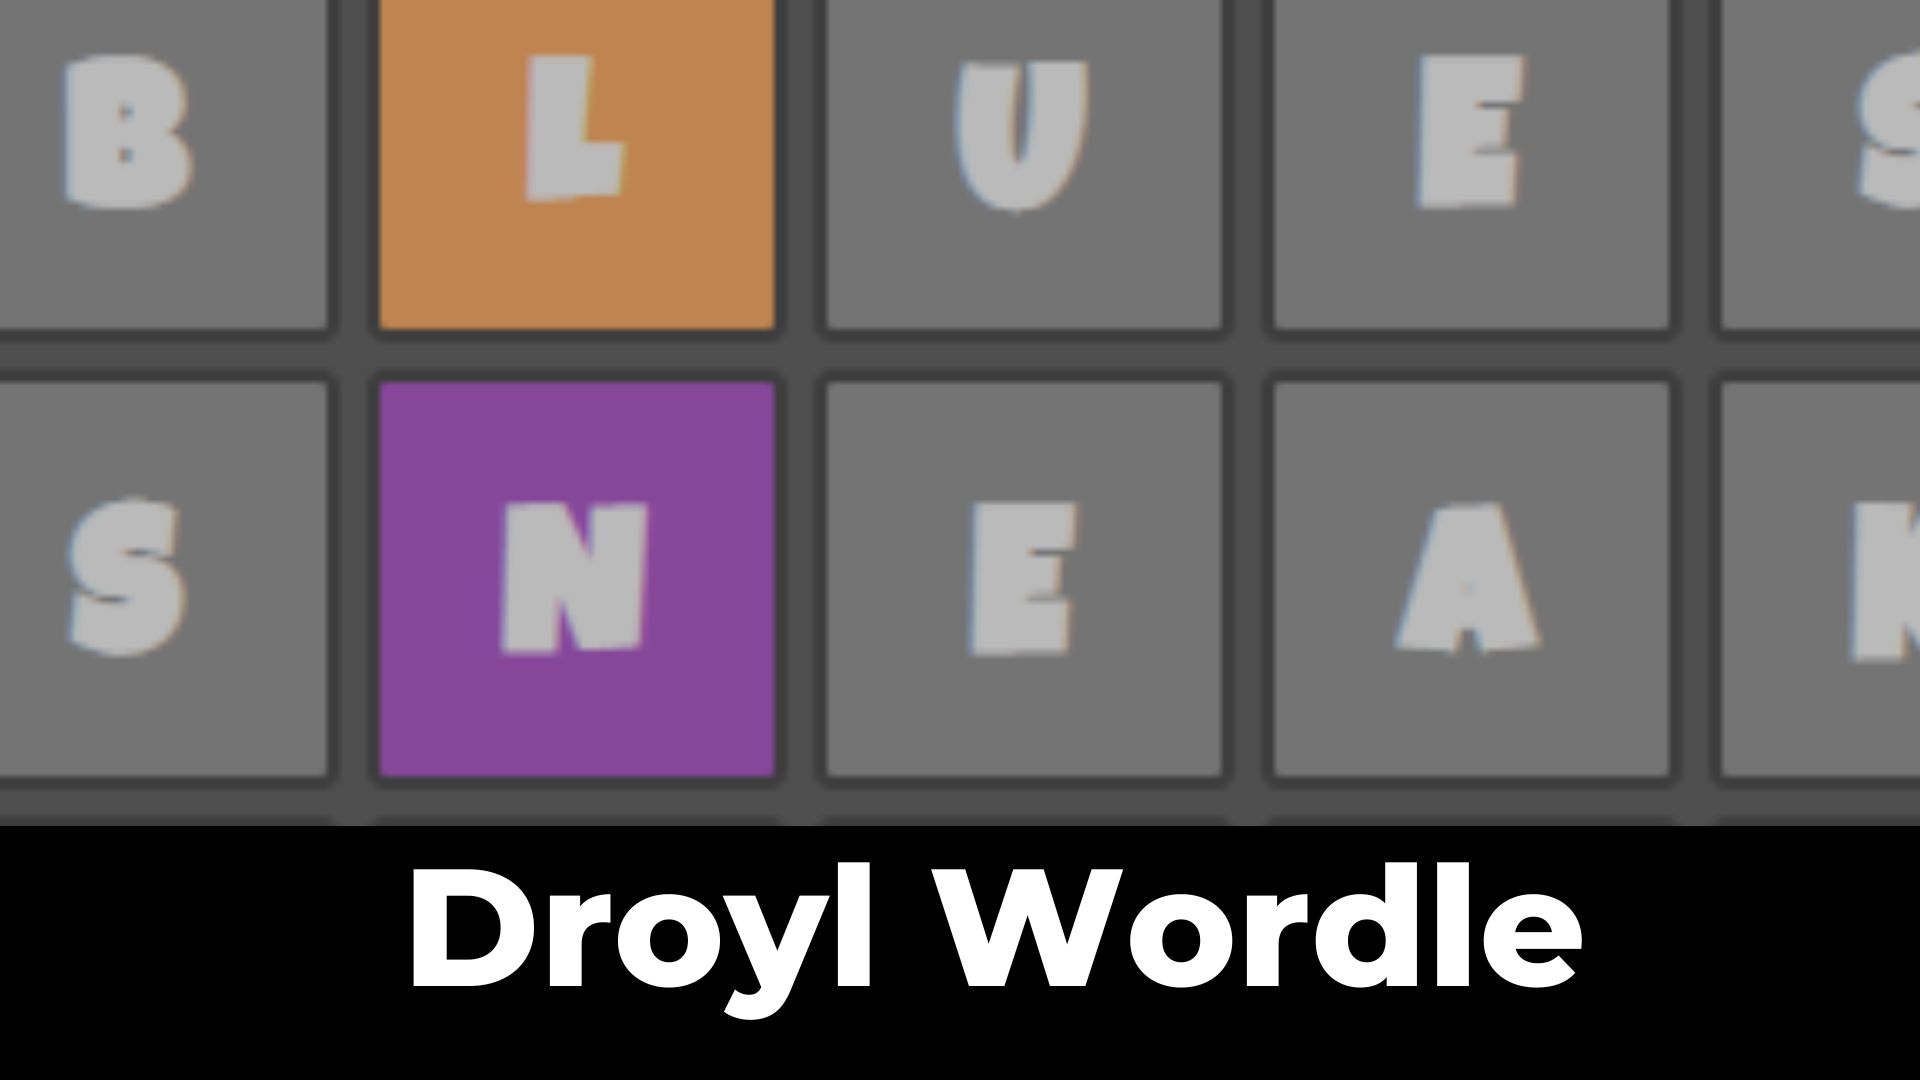 Droyl Wordle